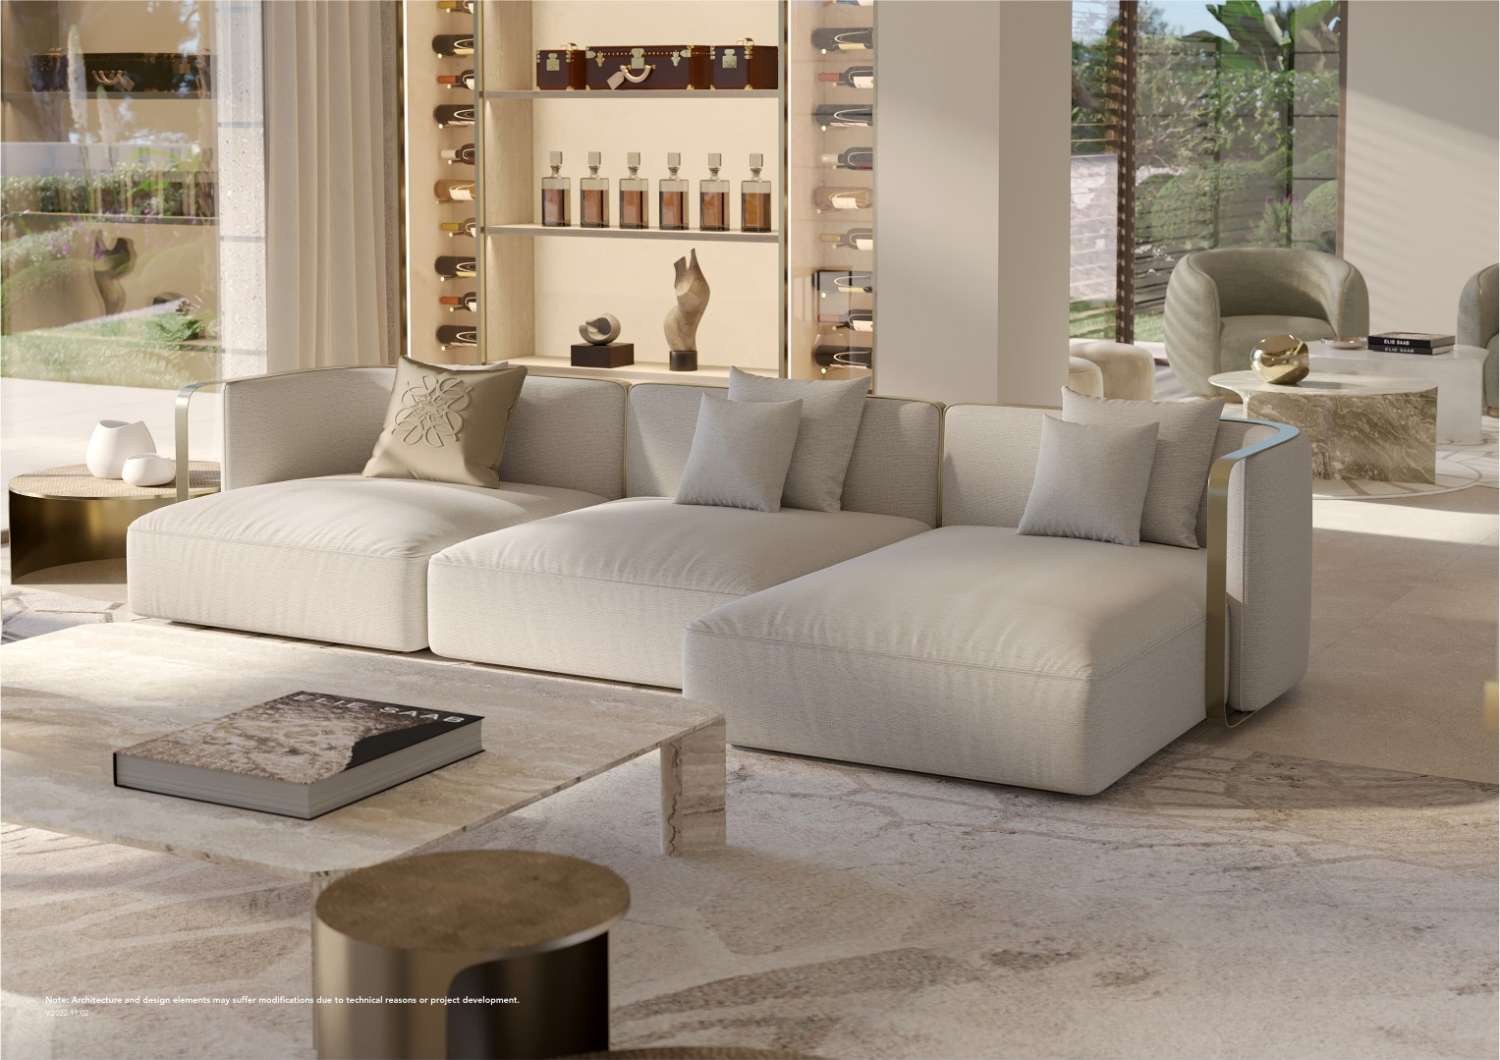 Exclusive luxury villas in Sierra Blanca, Marbella!